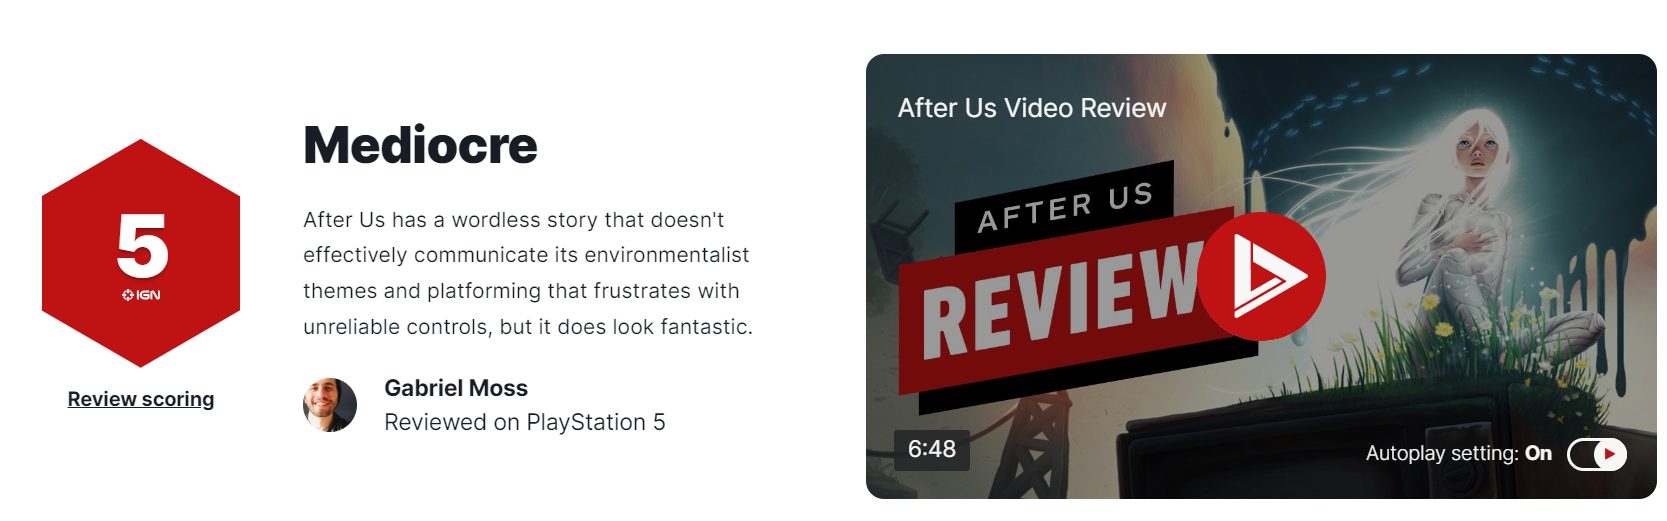 《After Us》IGN5：未能有效传达环保主题
